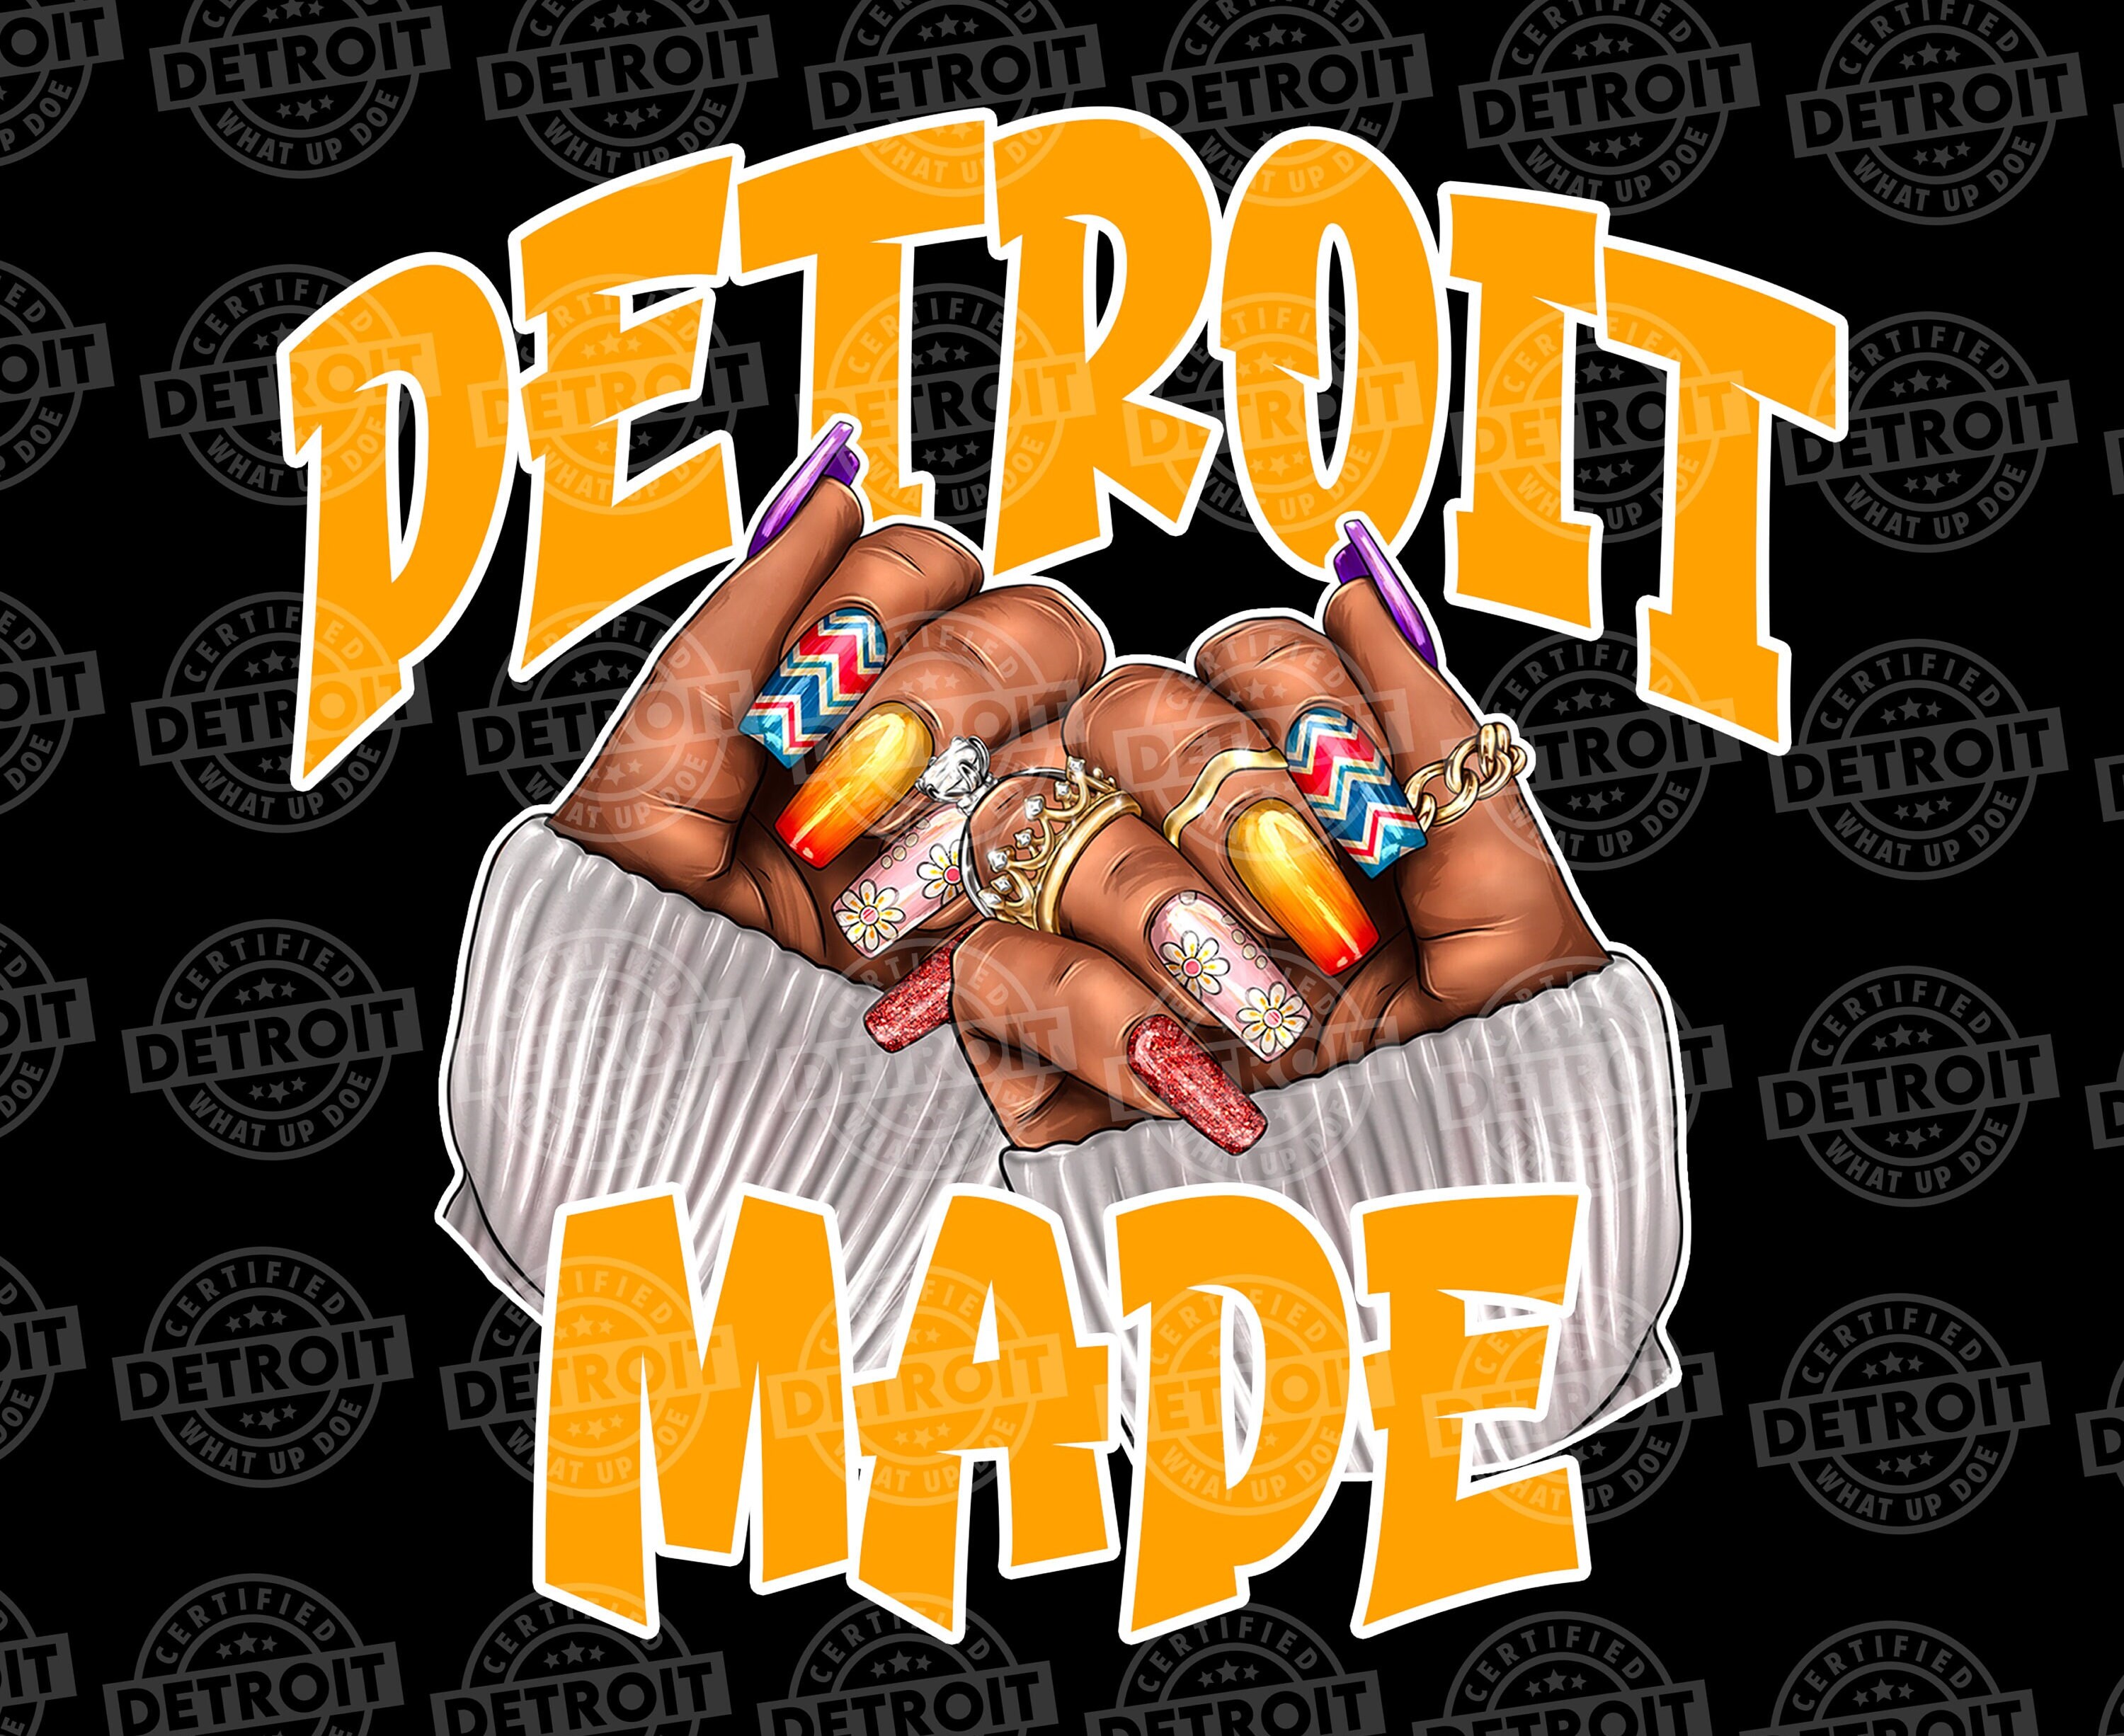 Remember when Detroit had dope jerseys : r/DetroitPistons